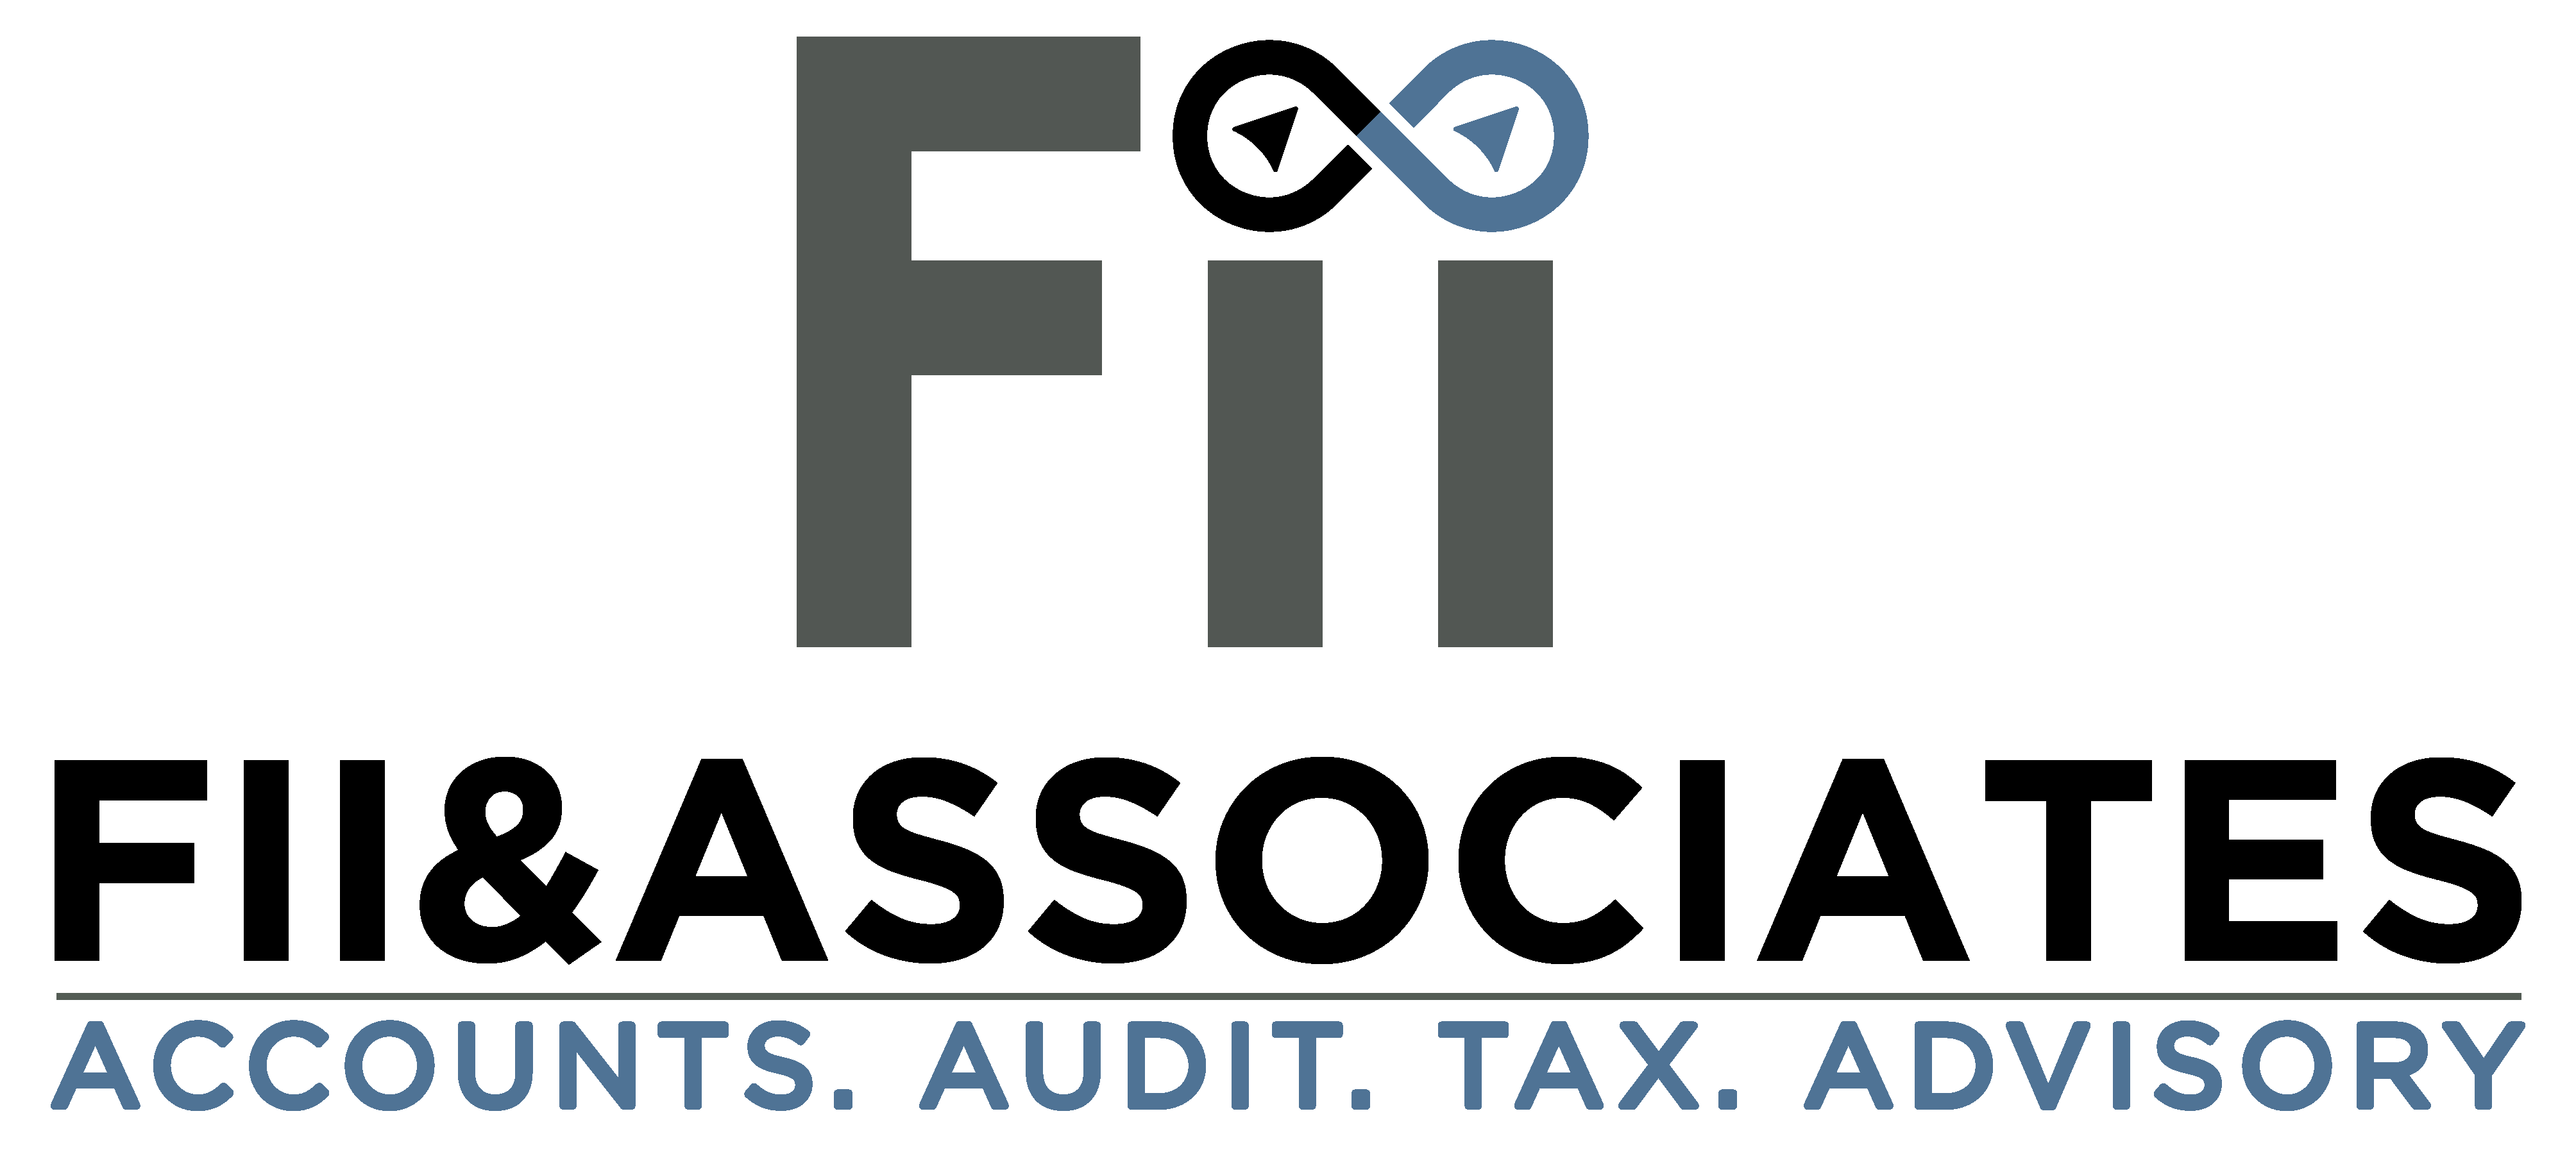 FII&Associates